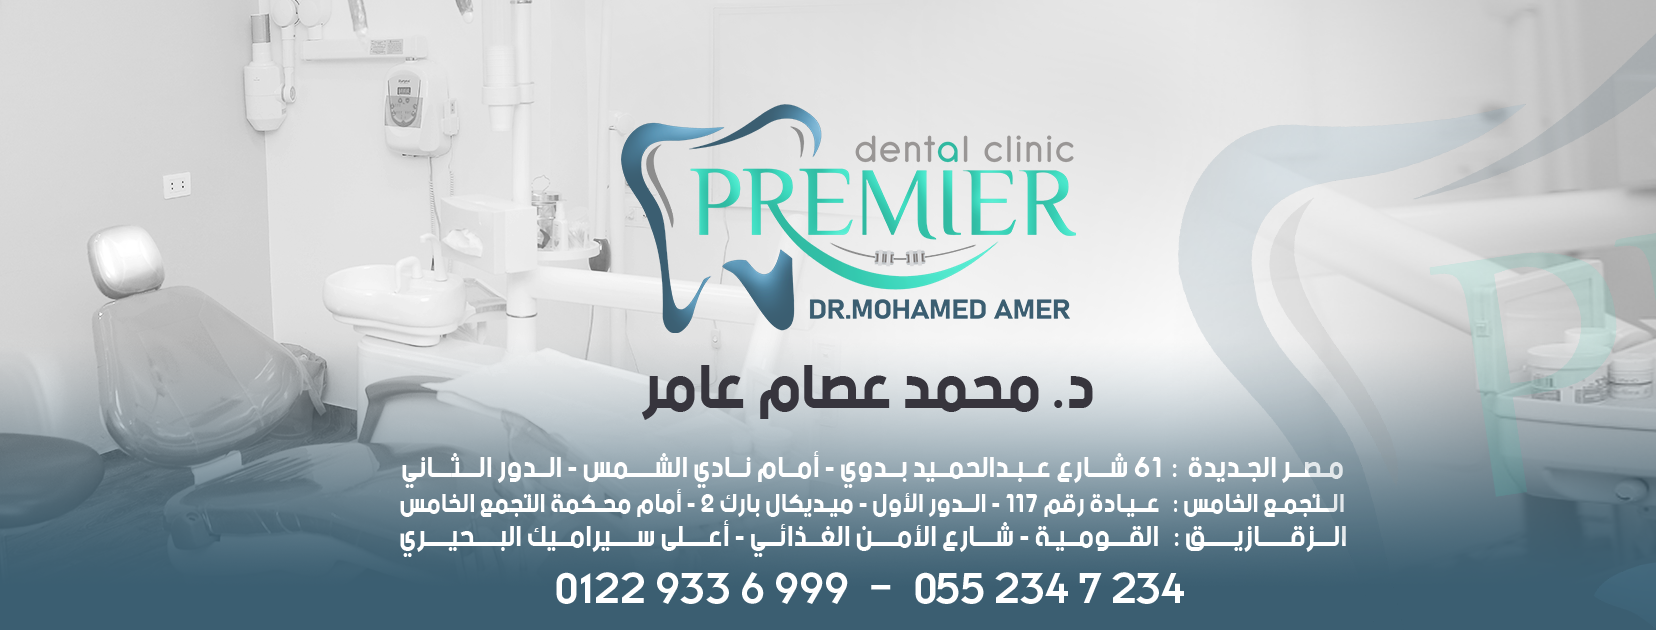 غلاف دكتور محمد عامر بريمير دينتل كلينك Premier Dental Clinic - Dr Mohamed Amer